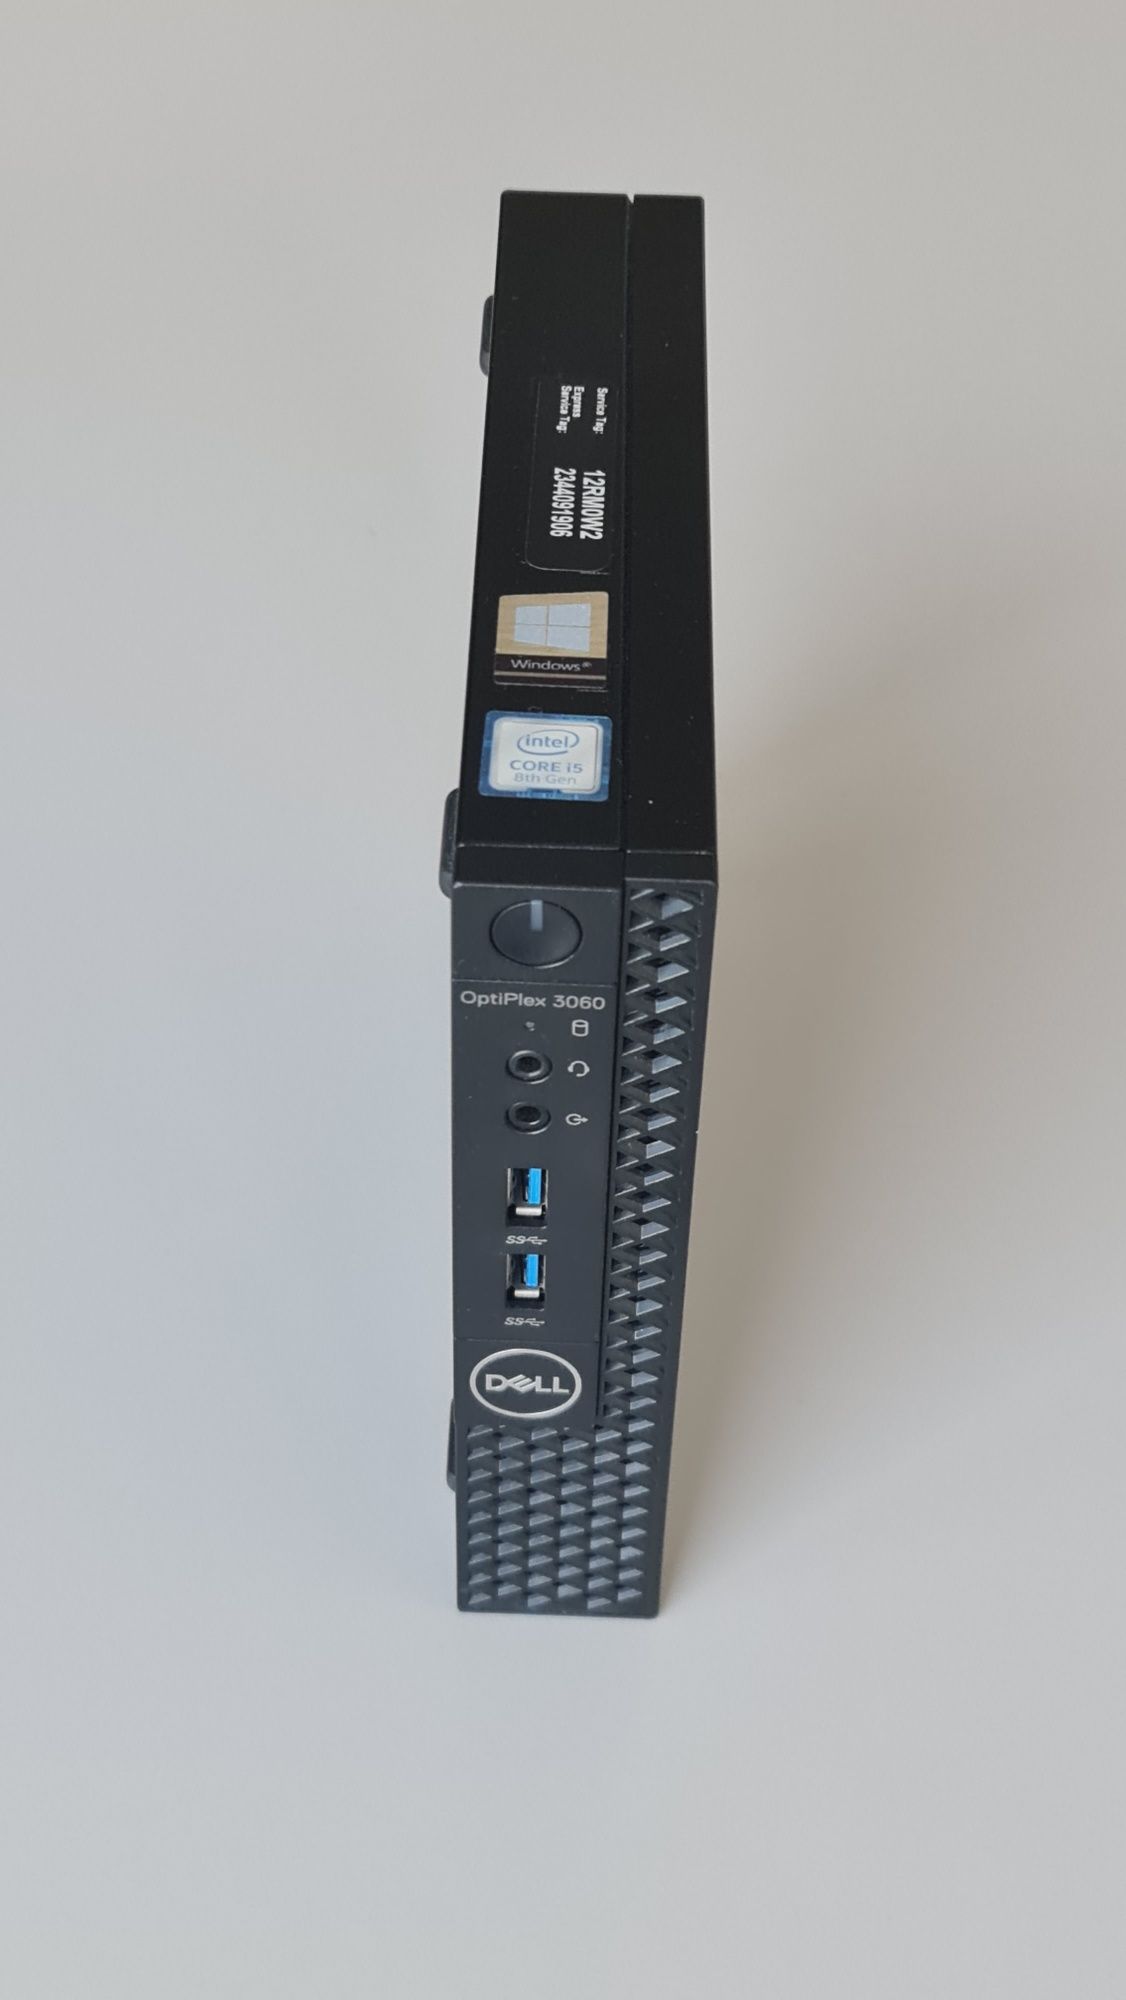 Dell optiplex 3060